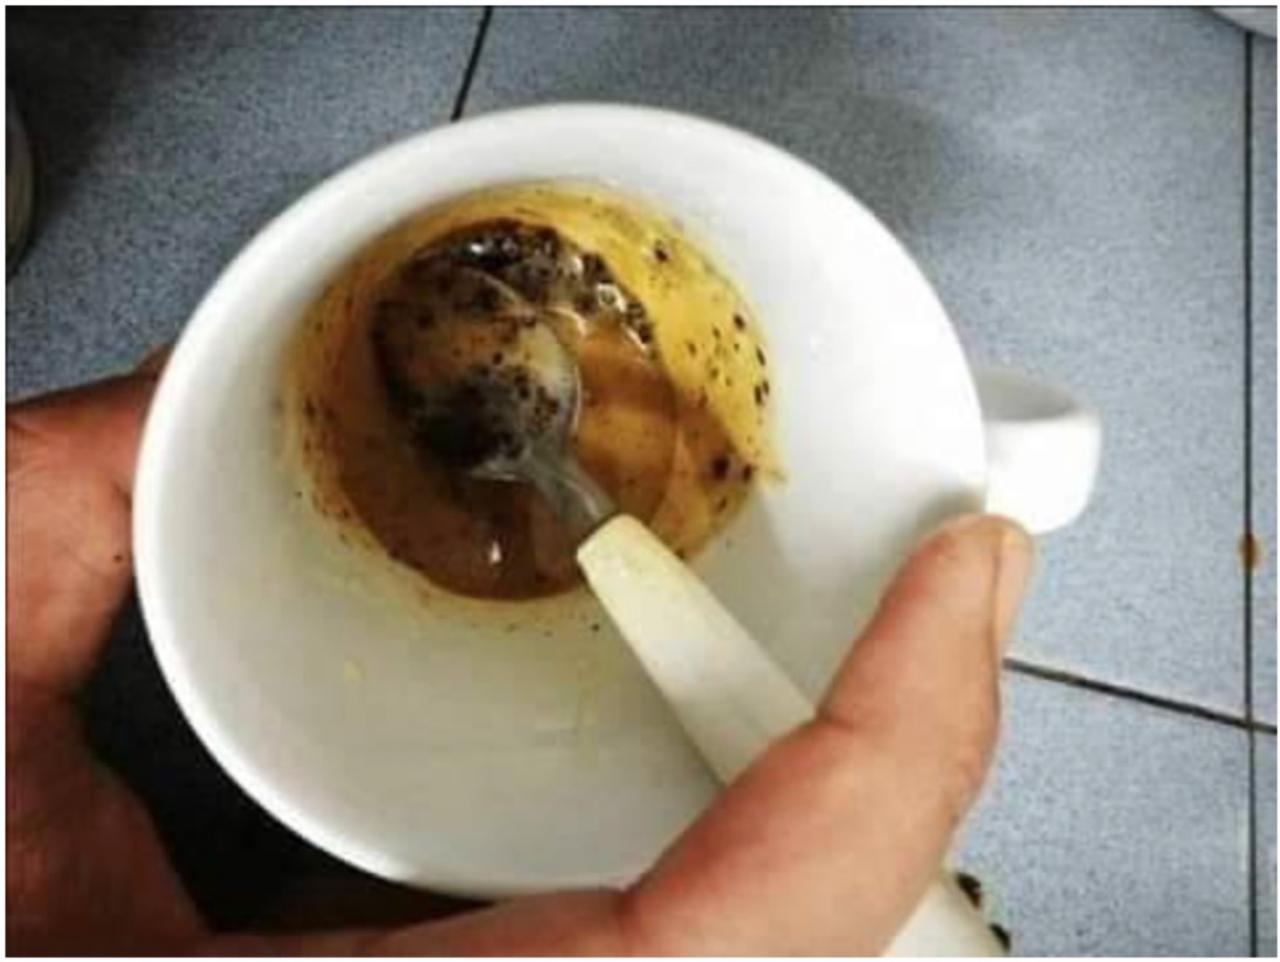  Resepi Bancuhan Air Nescafe Yang Paling Sedap, Dikongsi Sendiri Oleh Bekas Pekerja Starbucks